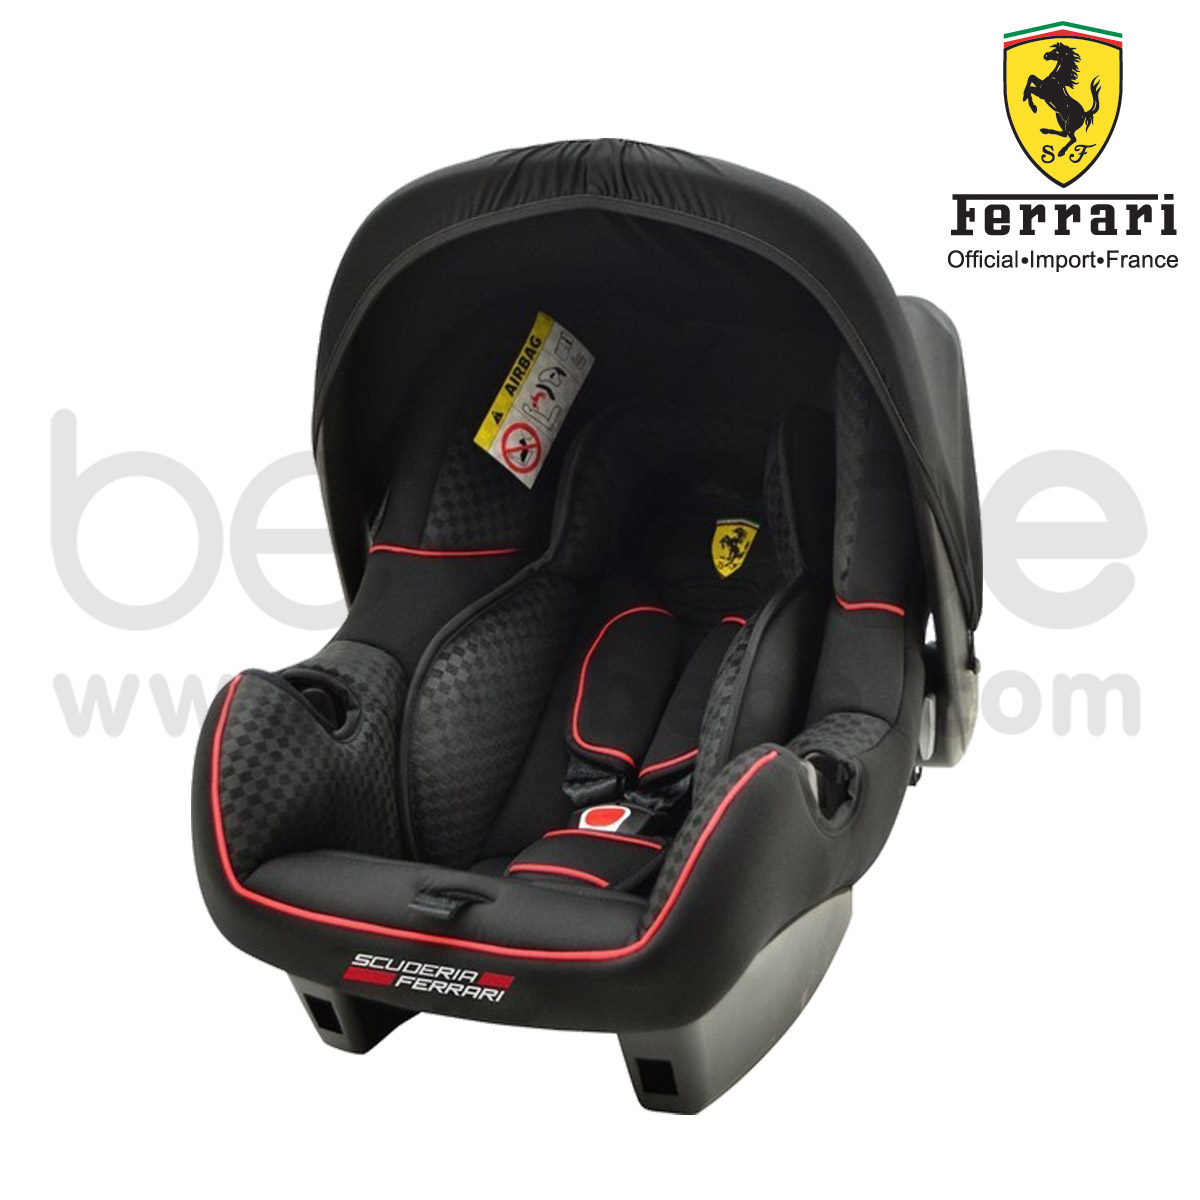 Car Seat Ferrari : Be One (Black) 